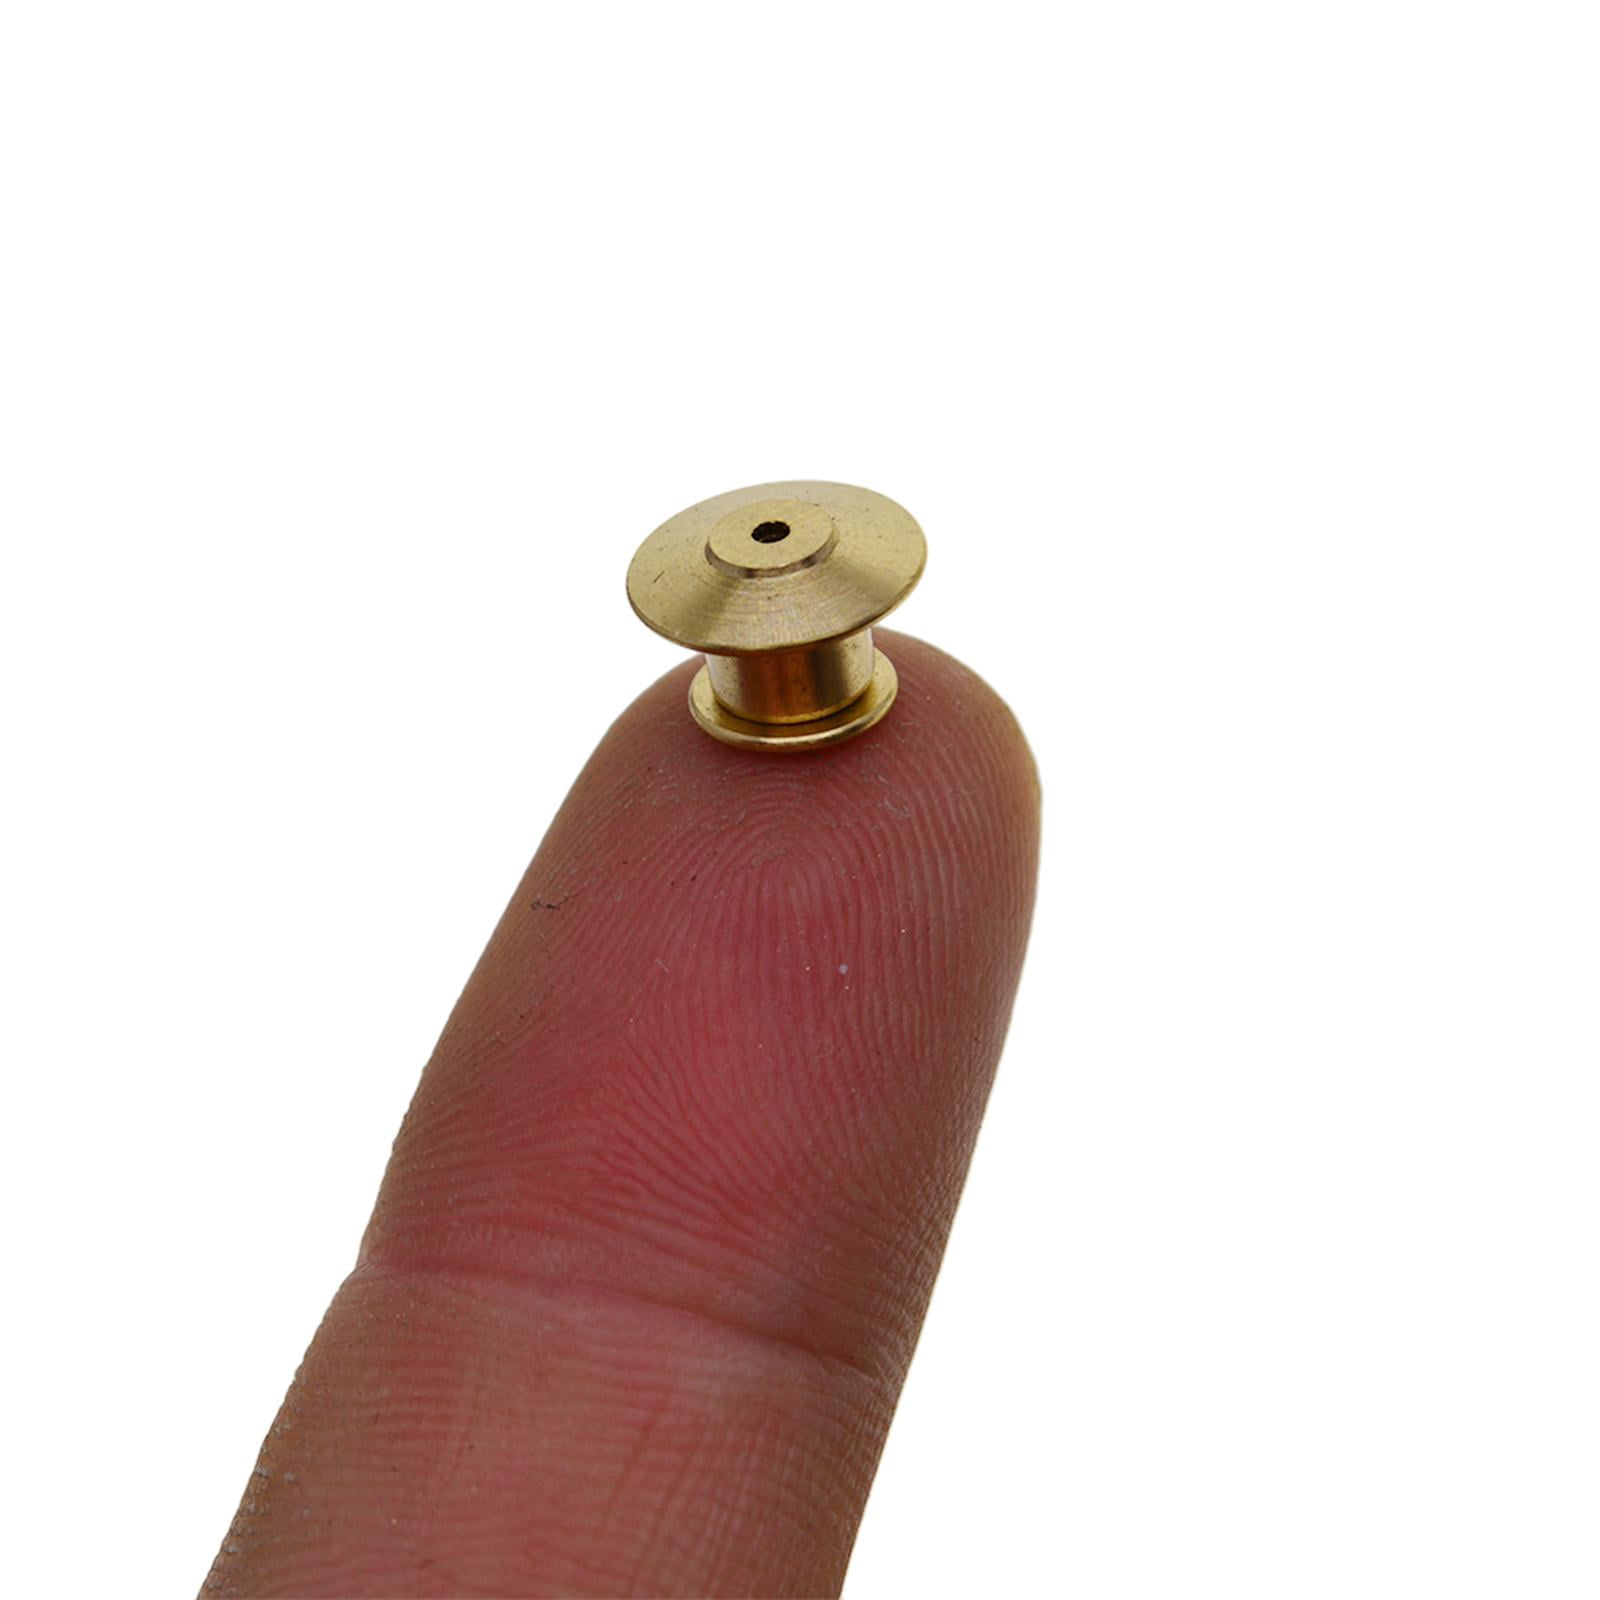 LQ Industrial 12pcs Metal Locking Pin Backs Clasp Bulk Pin Keepers for Name Tags Displaying Books Disney Pins Brass